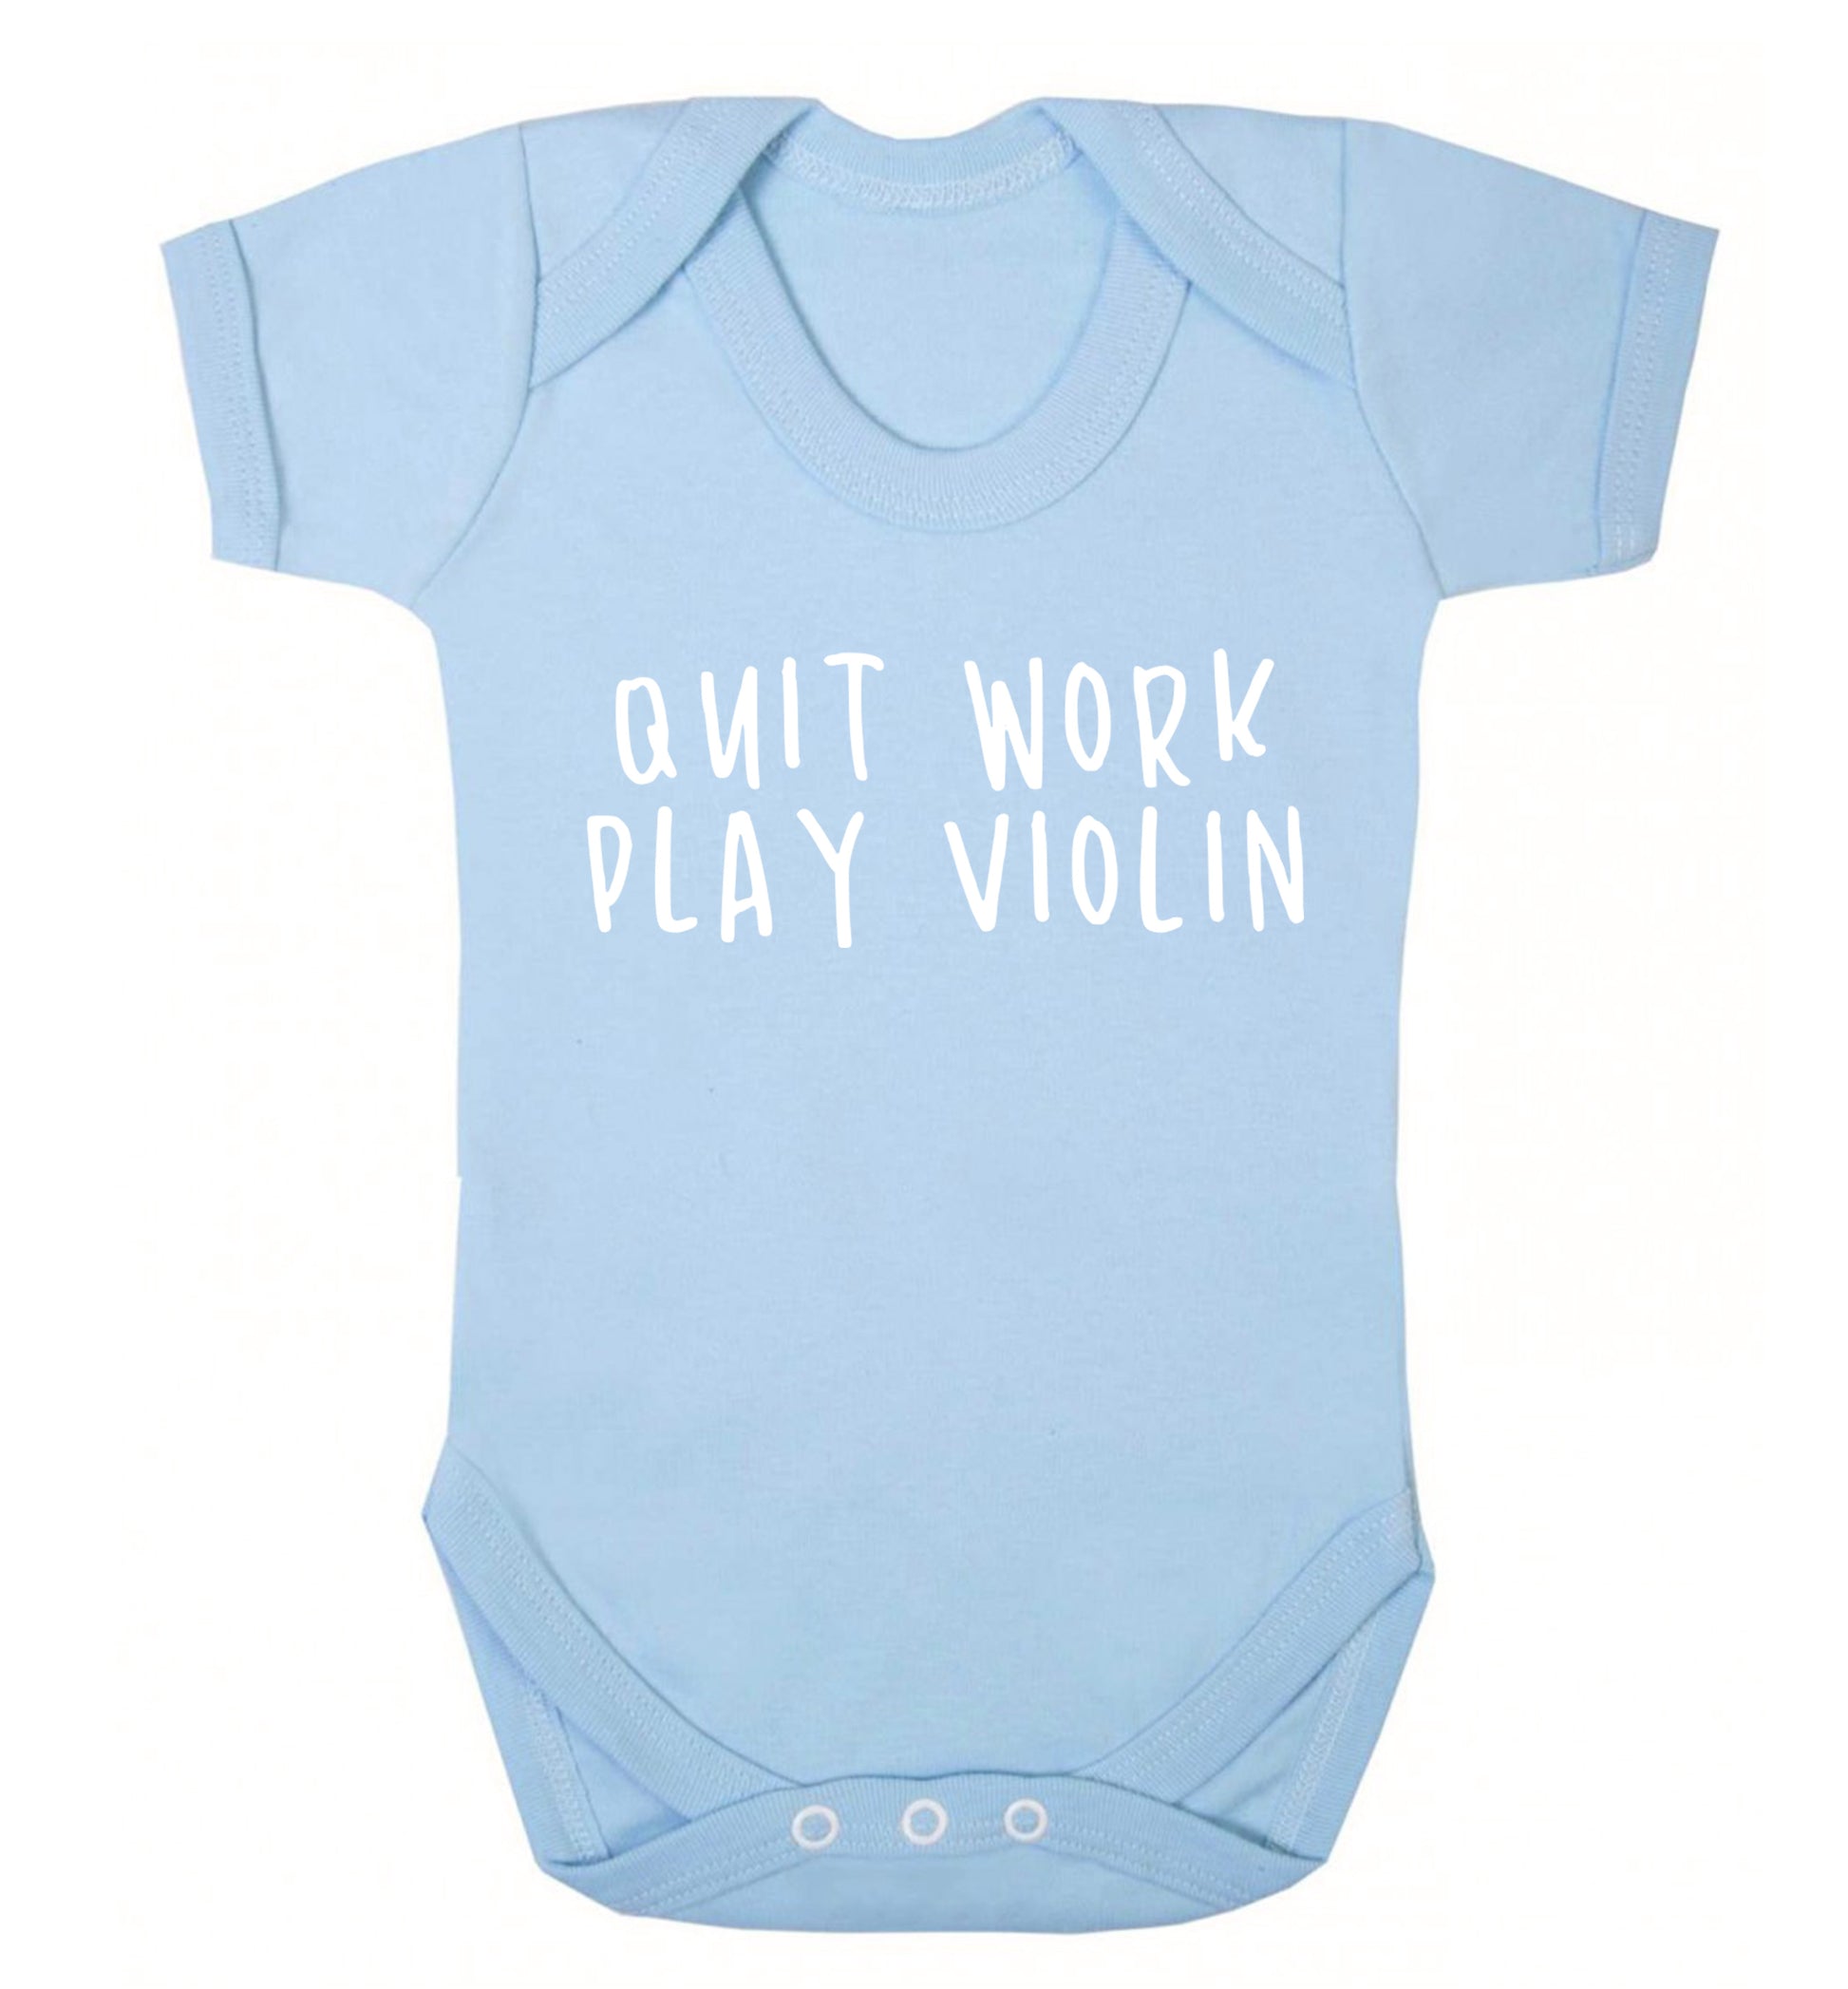 Quit work play violin Baby Vest pale blue 18-24 months